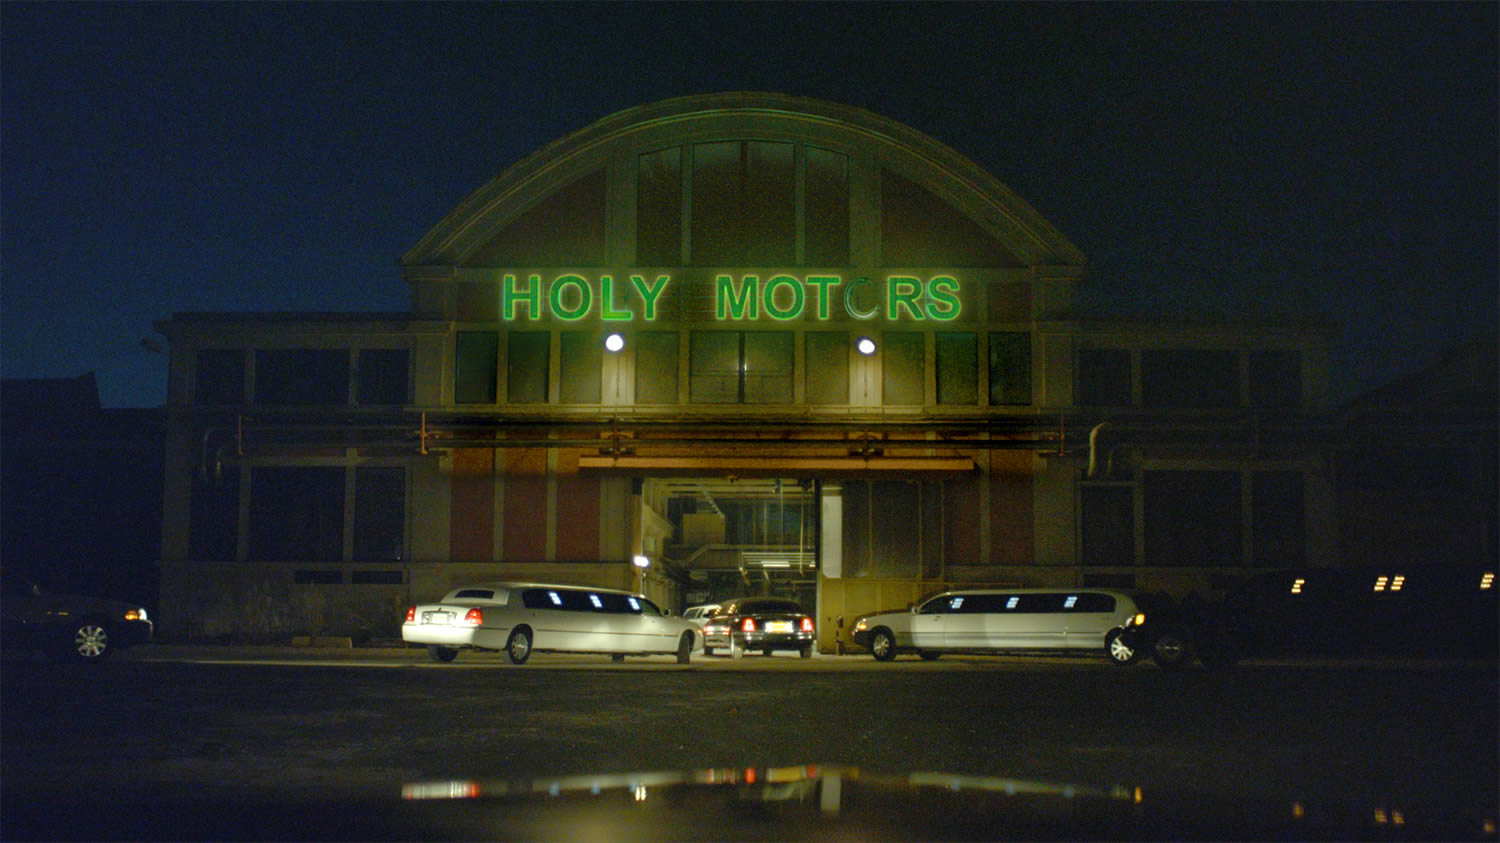 holy motor, limos near building